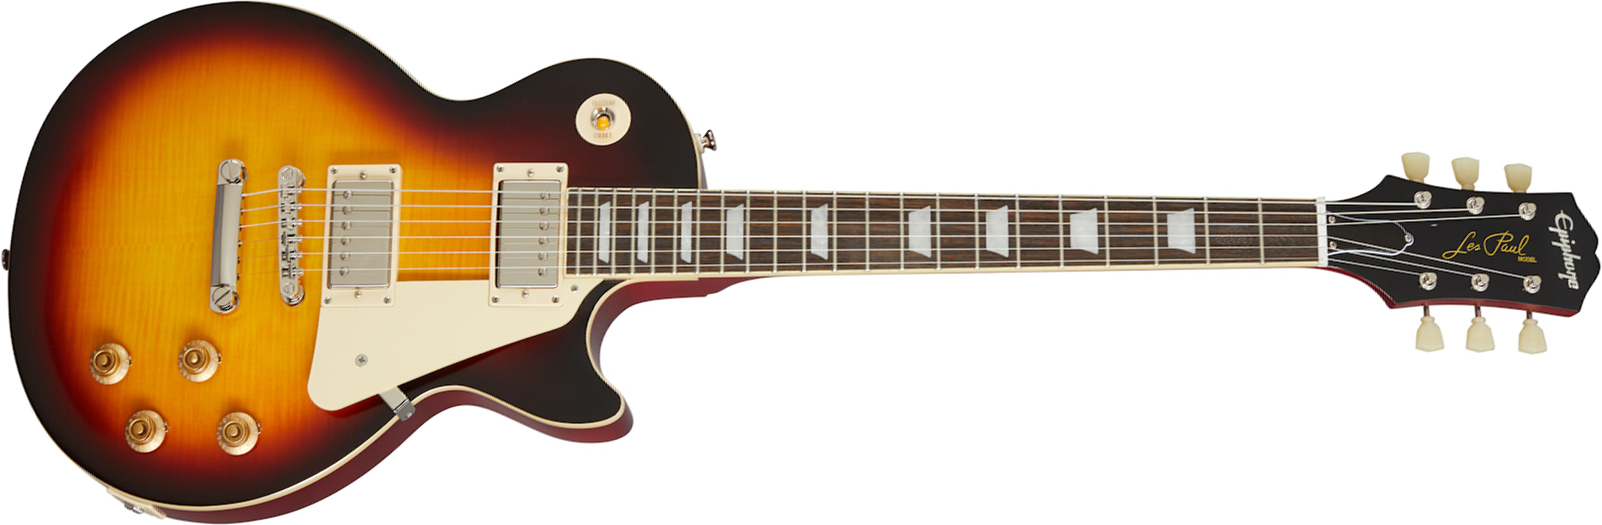 Epiphone Les Paul Standard 1959 Outfit 2h Ht Rw - Aged Dark Burst - Enkel gesneden elektrische gitaar - Main picture